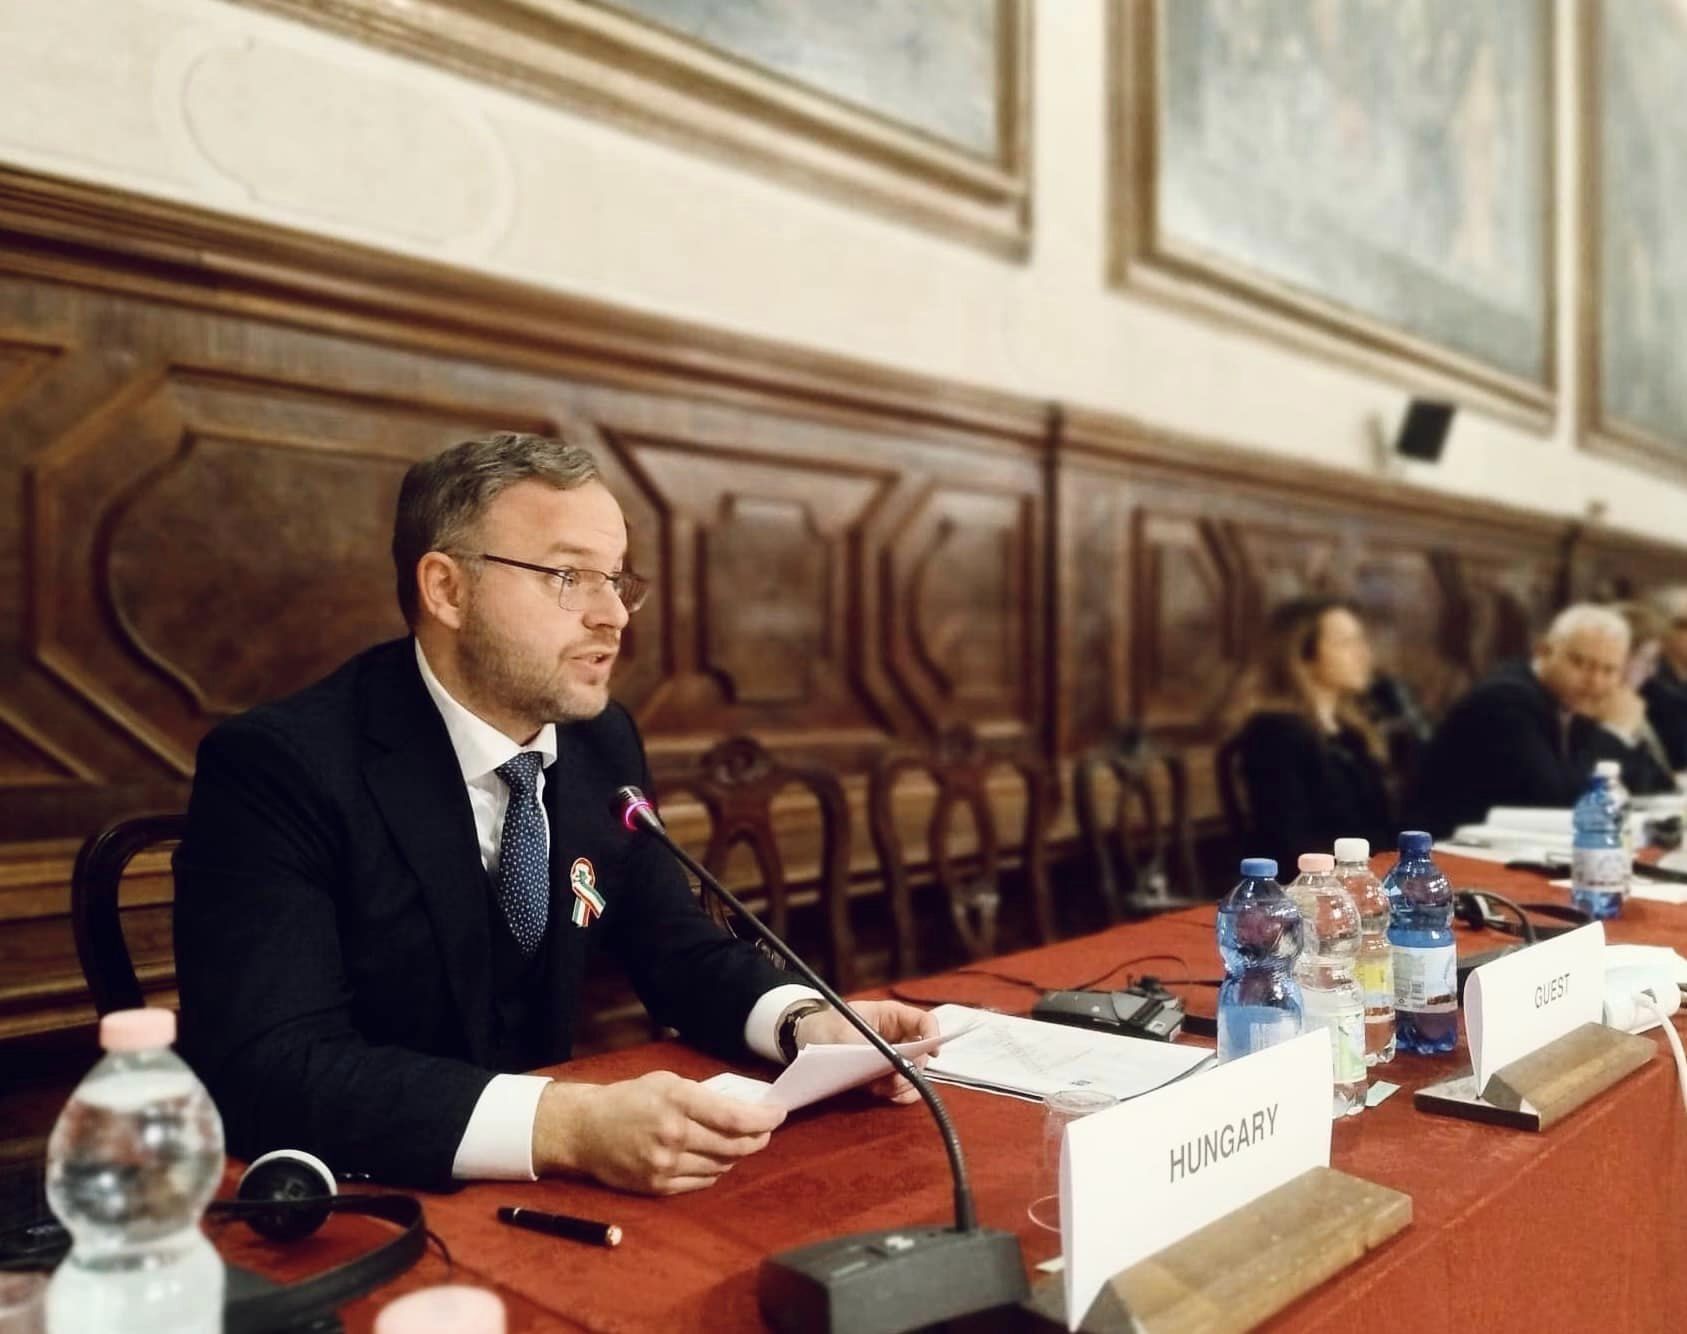 Venedig-Kommission nimmt Ungarns Souveränität unter Beschuss